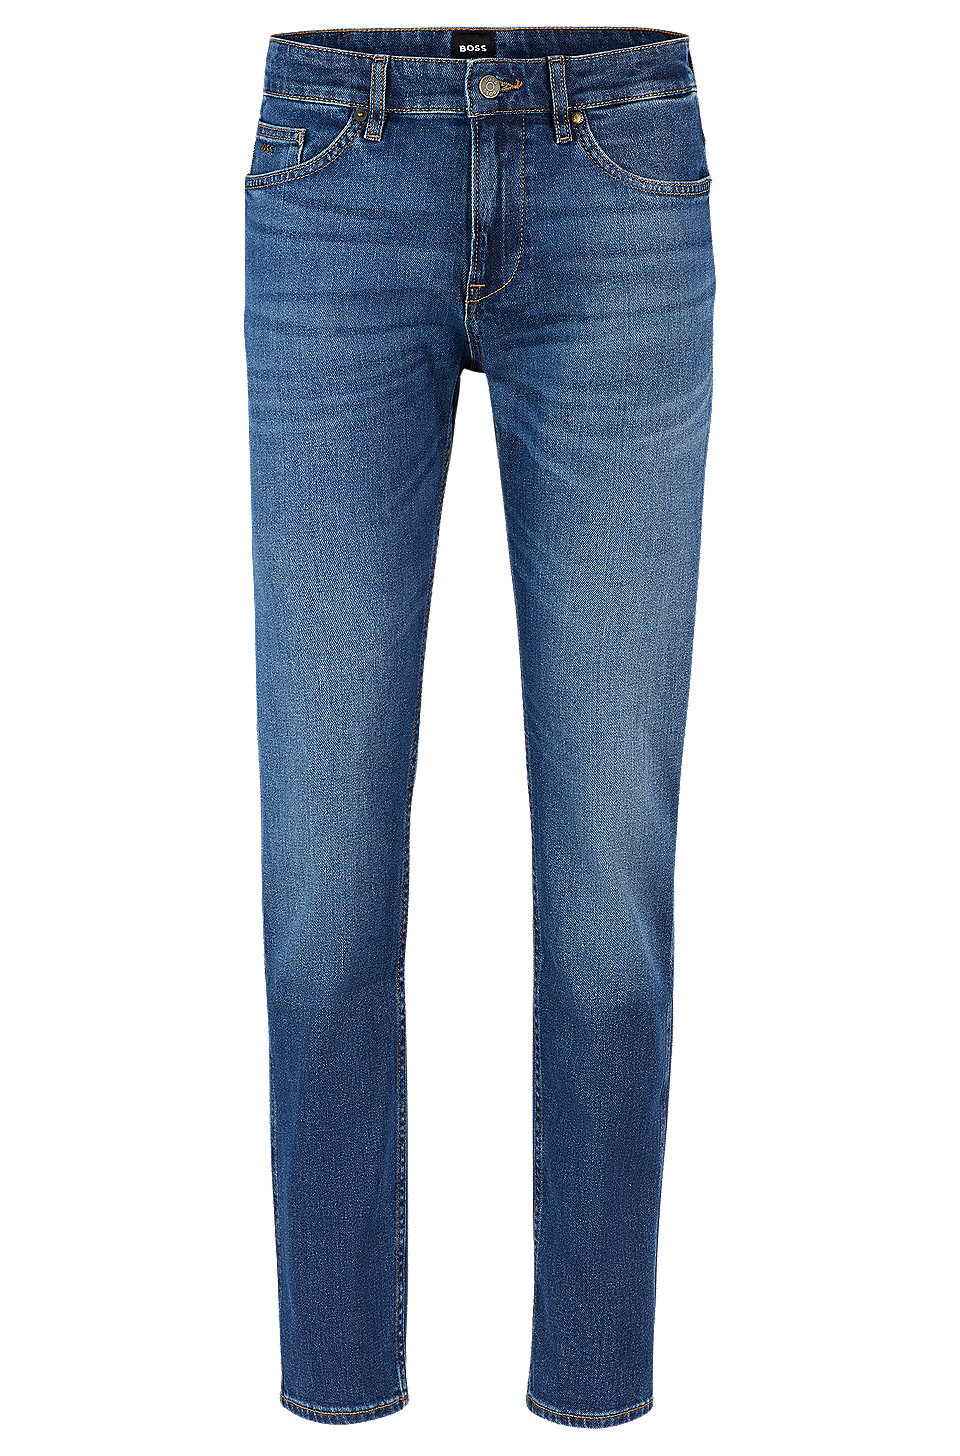 BOSS - Blaue Slim-Fit Jeans aus bequemem Stretch-Denim